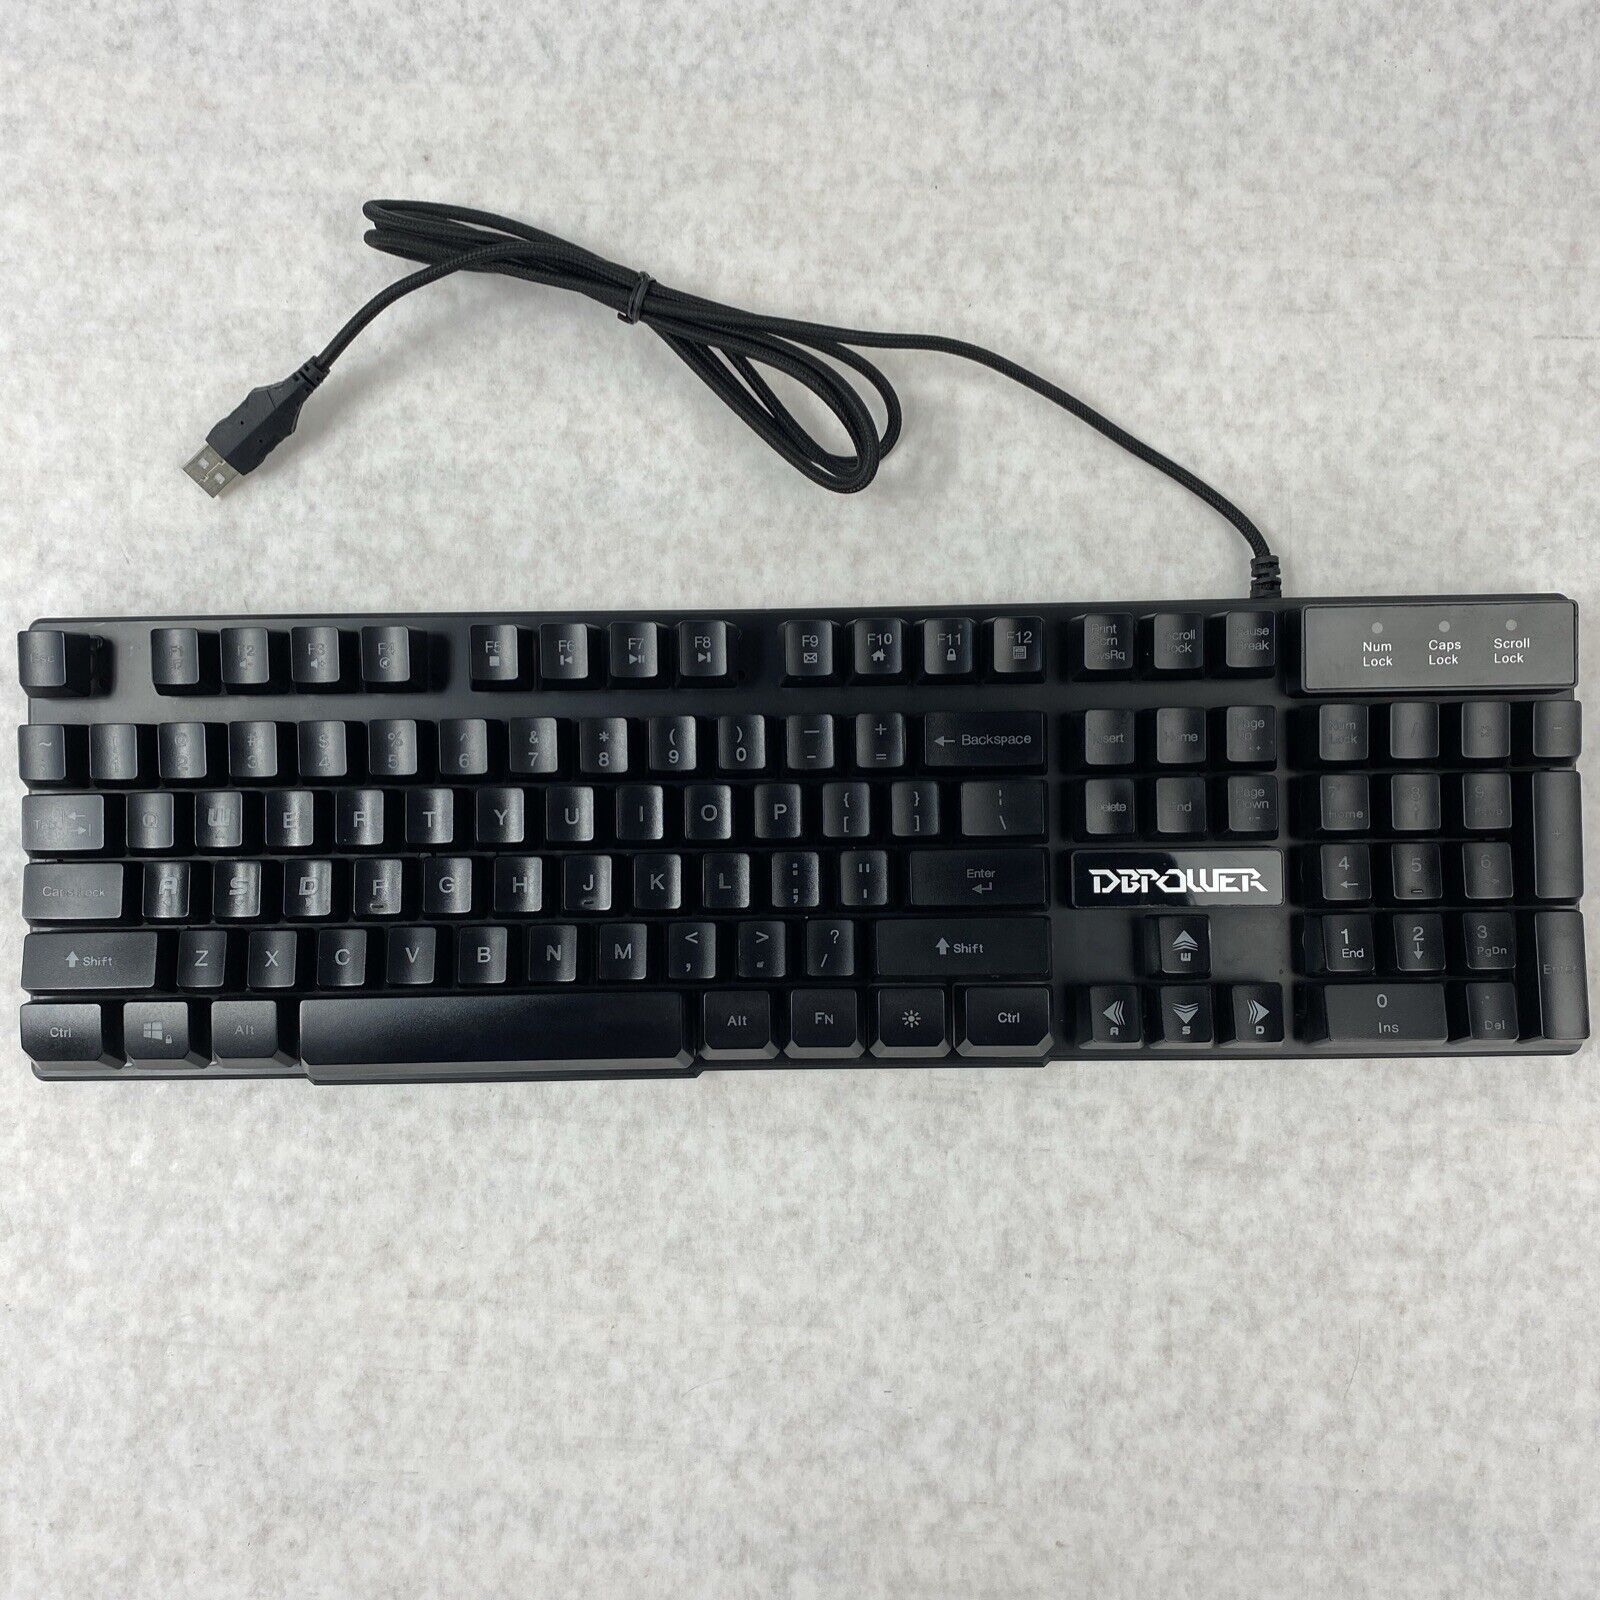 DBPower K928 USB Gaming Keyboard With Red Underlighting